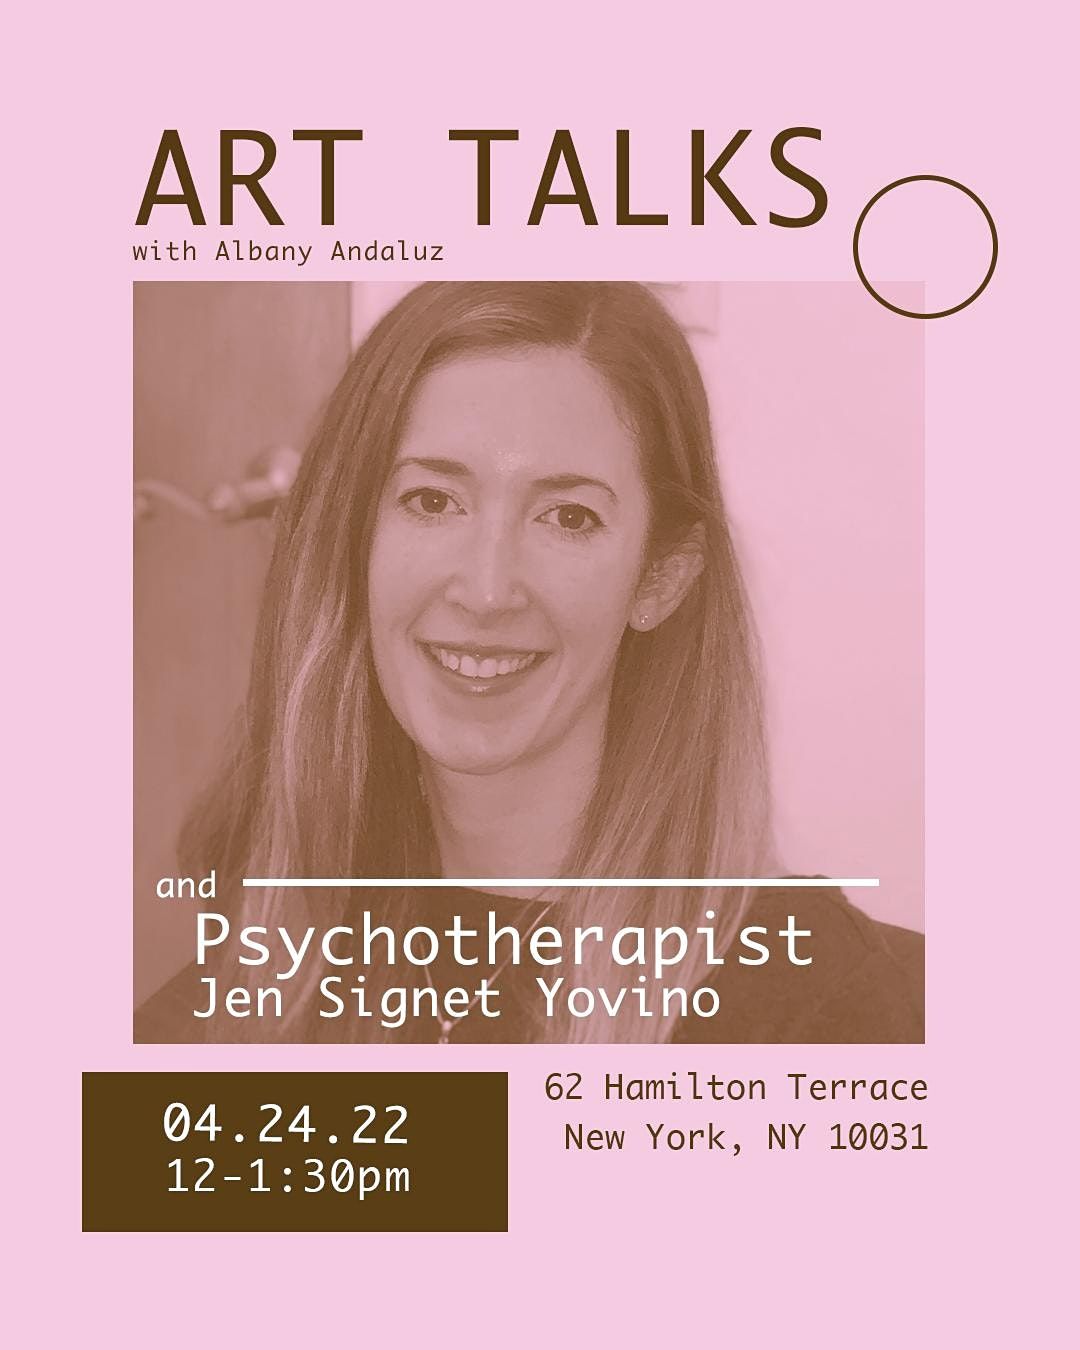 Art Talks: The Art of Self Discovery with Jen Signet Yovino